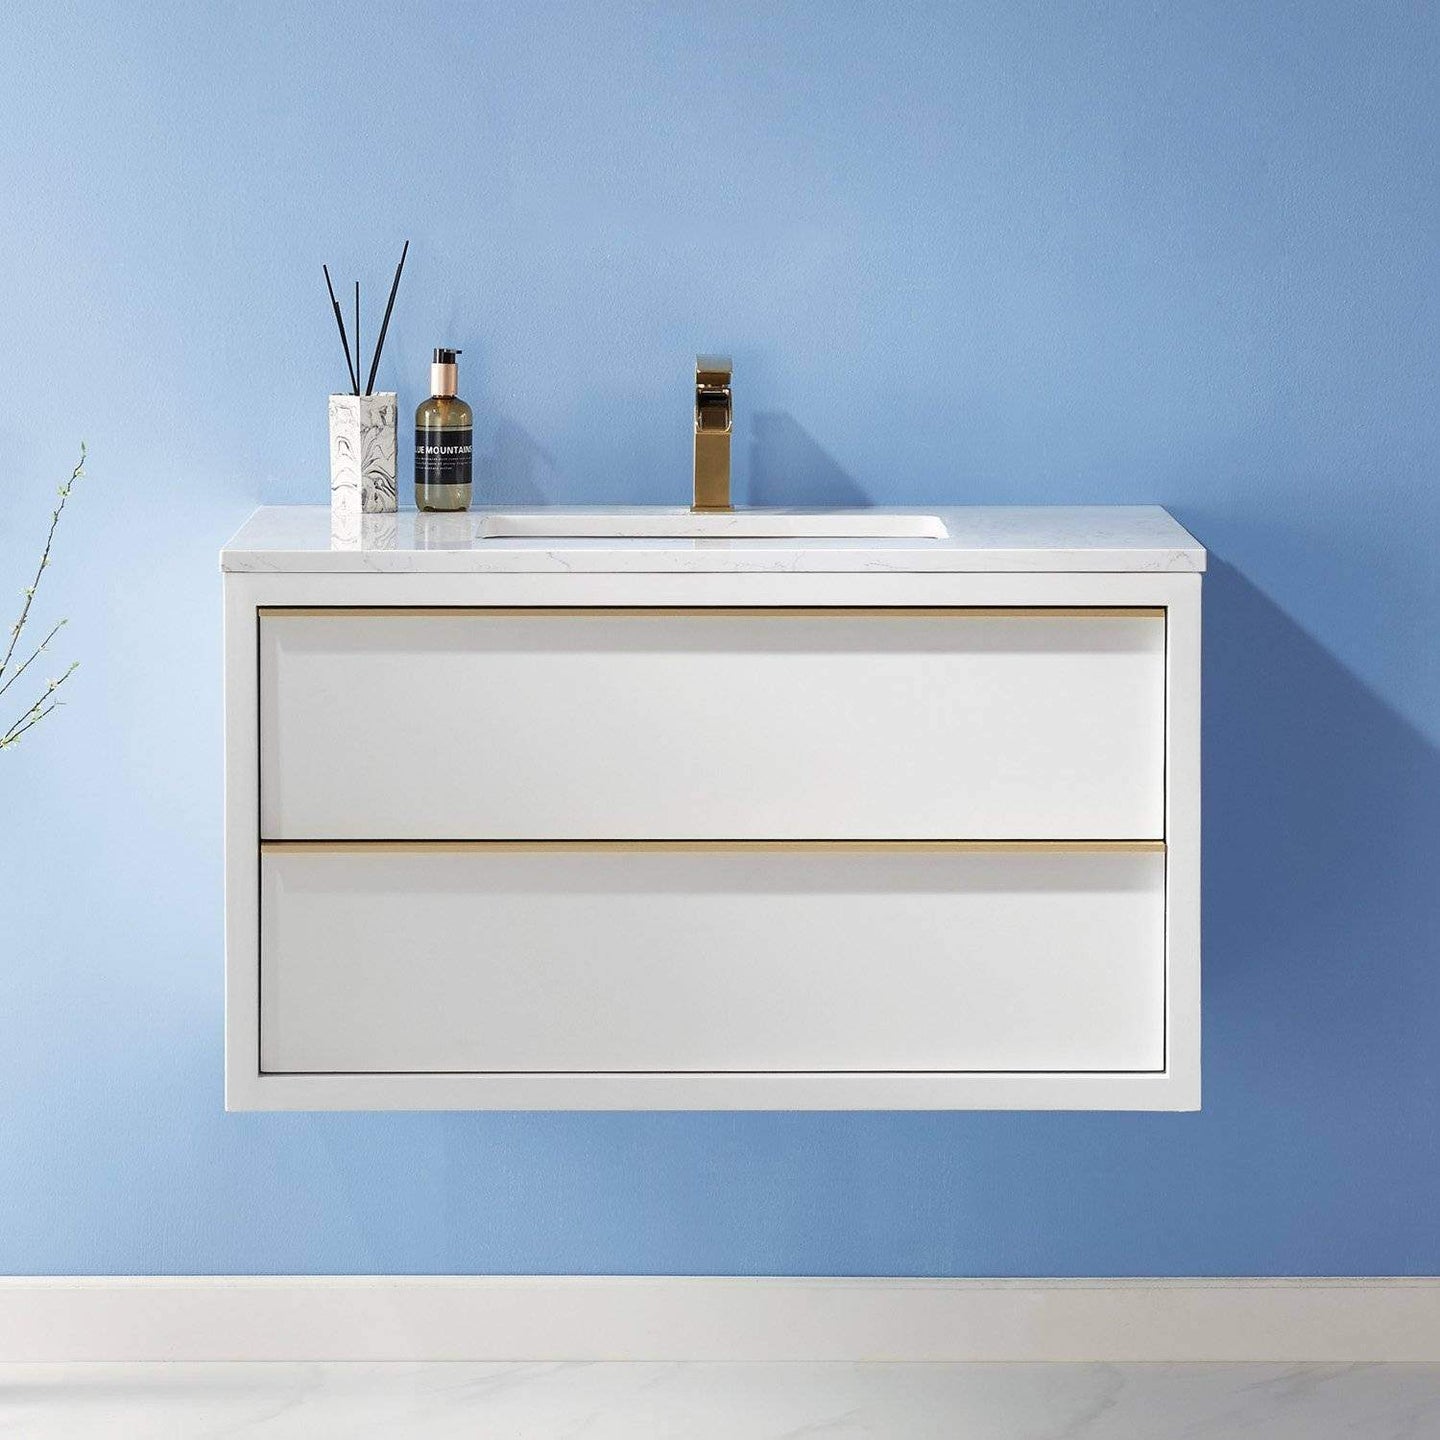 Altair Morgan 36 Inch Single Bathroom Vanity with Composite Carrara White Stone Countertop-Altair Design-